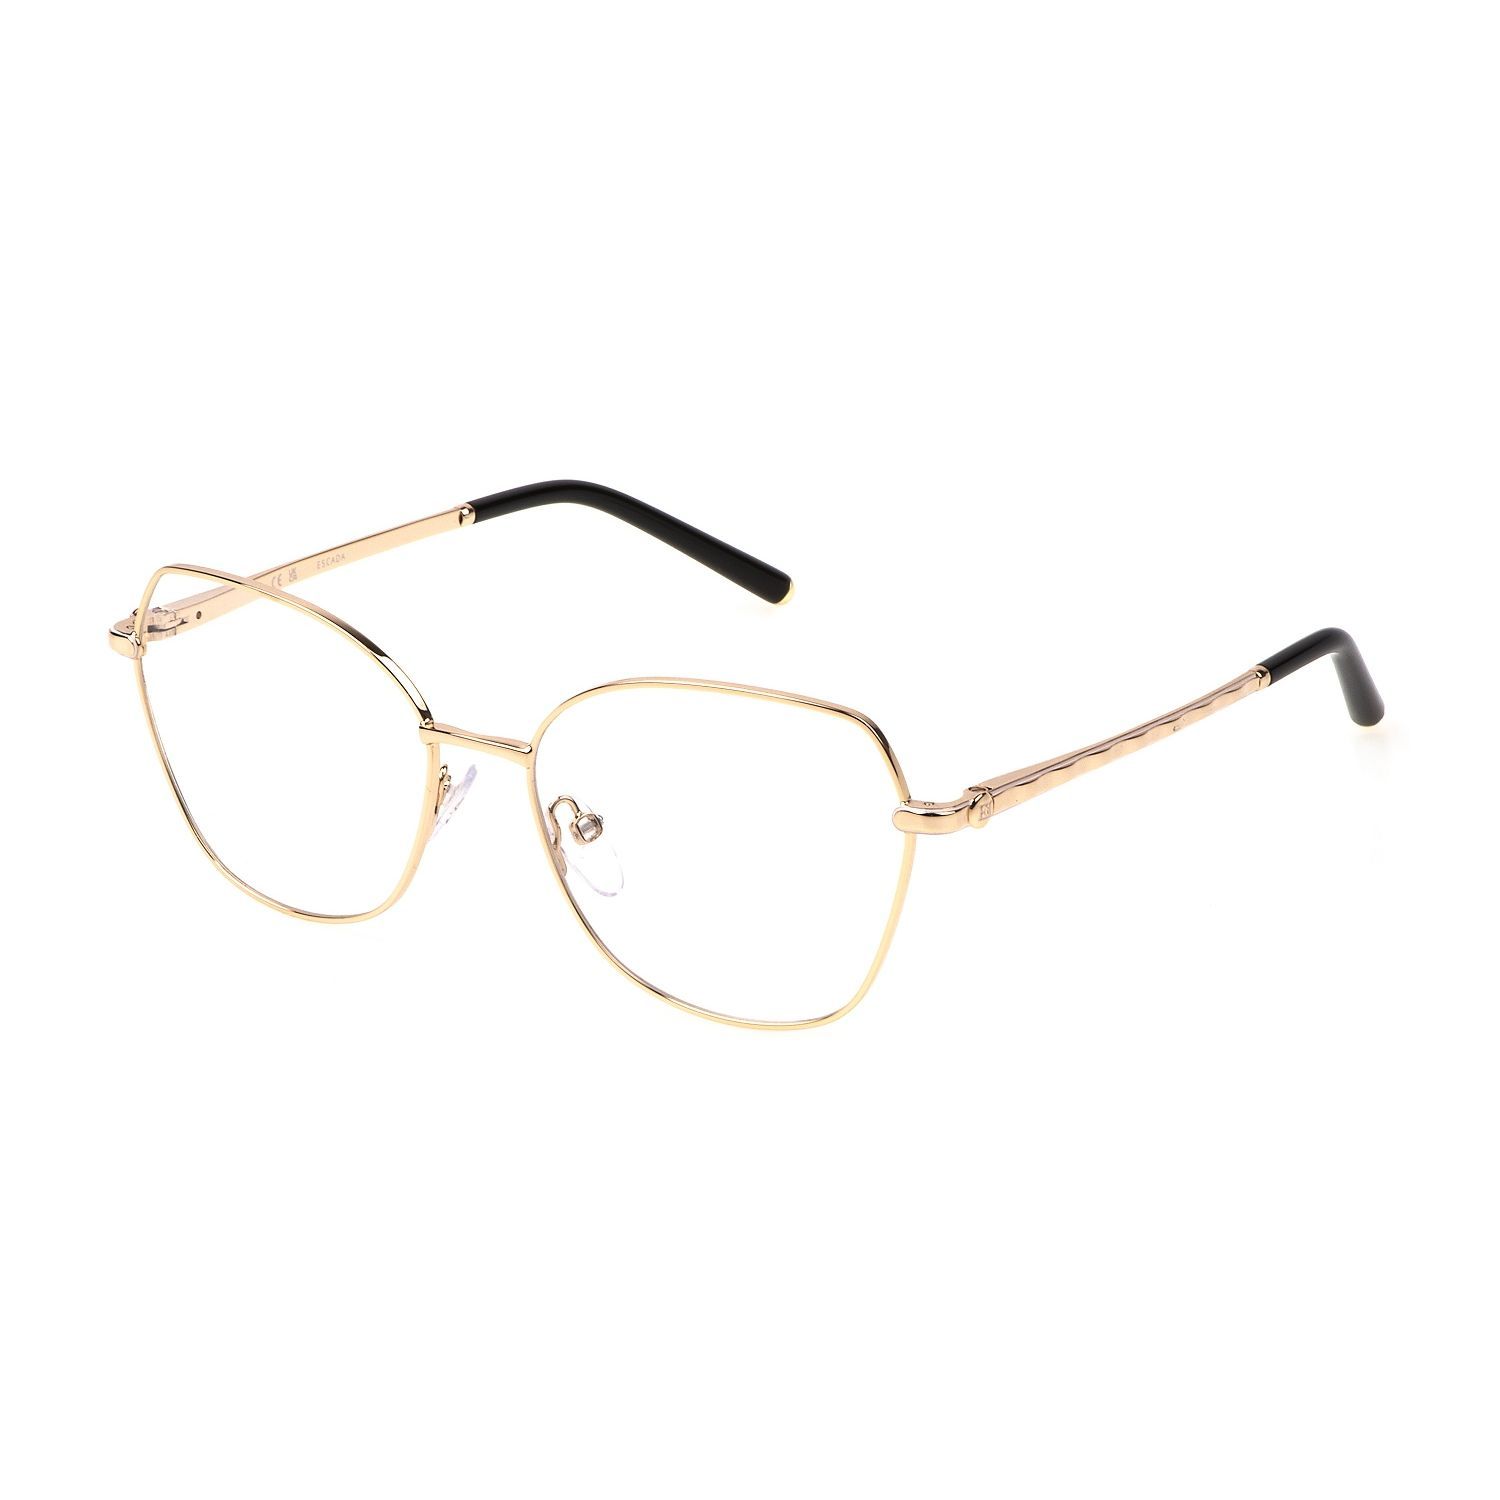 VESE39 Geometric Eyeglasses 0F47 - size 54